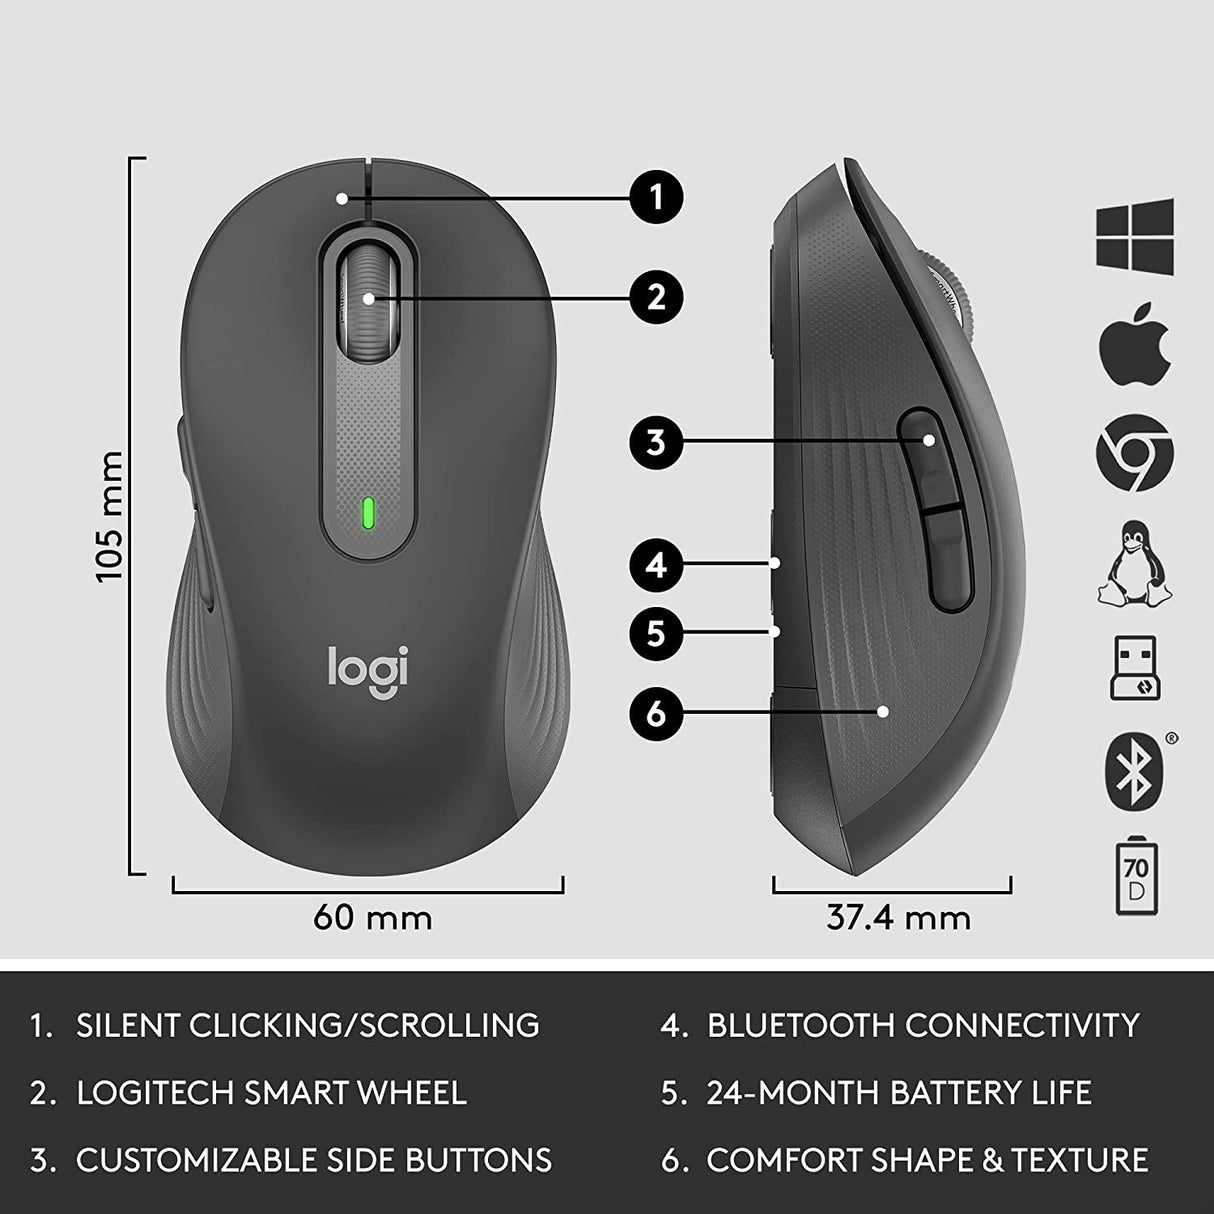 Logitech Signature MK650 Combo for Business, Wireless Mouse and Keyboard, Logi Bolt, Bluetooth, SmartWheel, Globally Certified, Windows/Mac/Chrome/Linux - Graphite